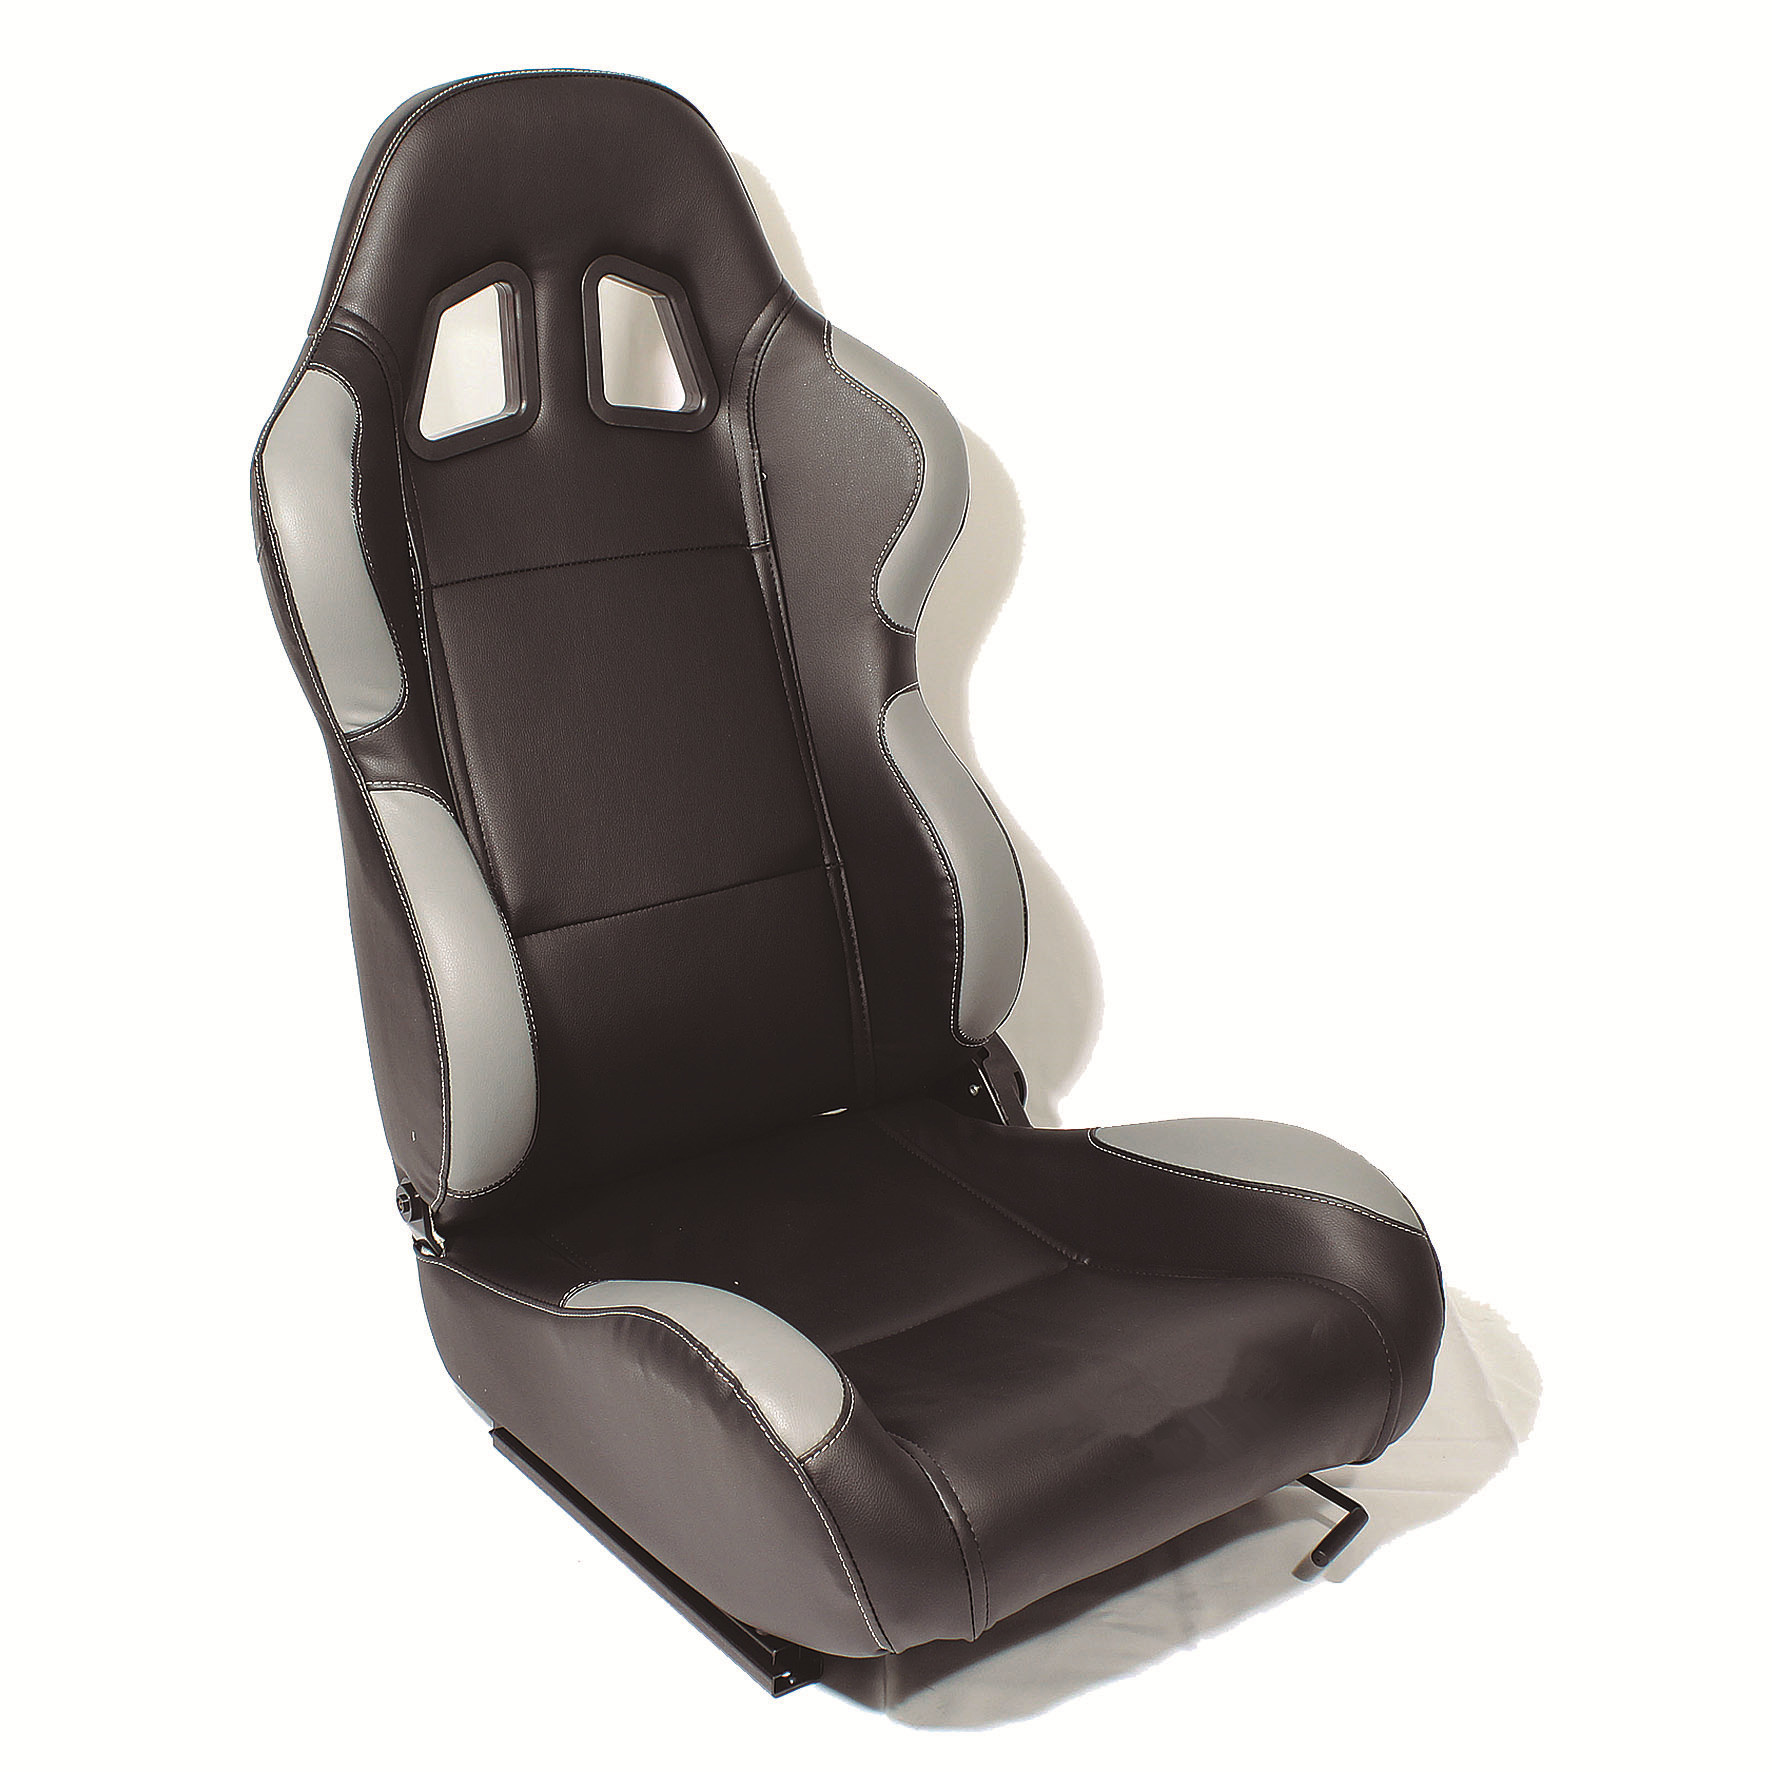 Adjustable Black And Grey Racing Seats , Classic Racing Seats Metal Frame